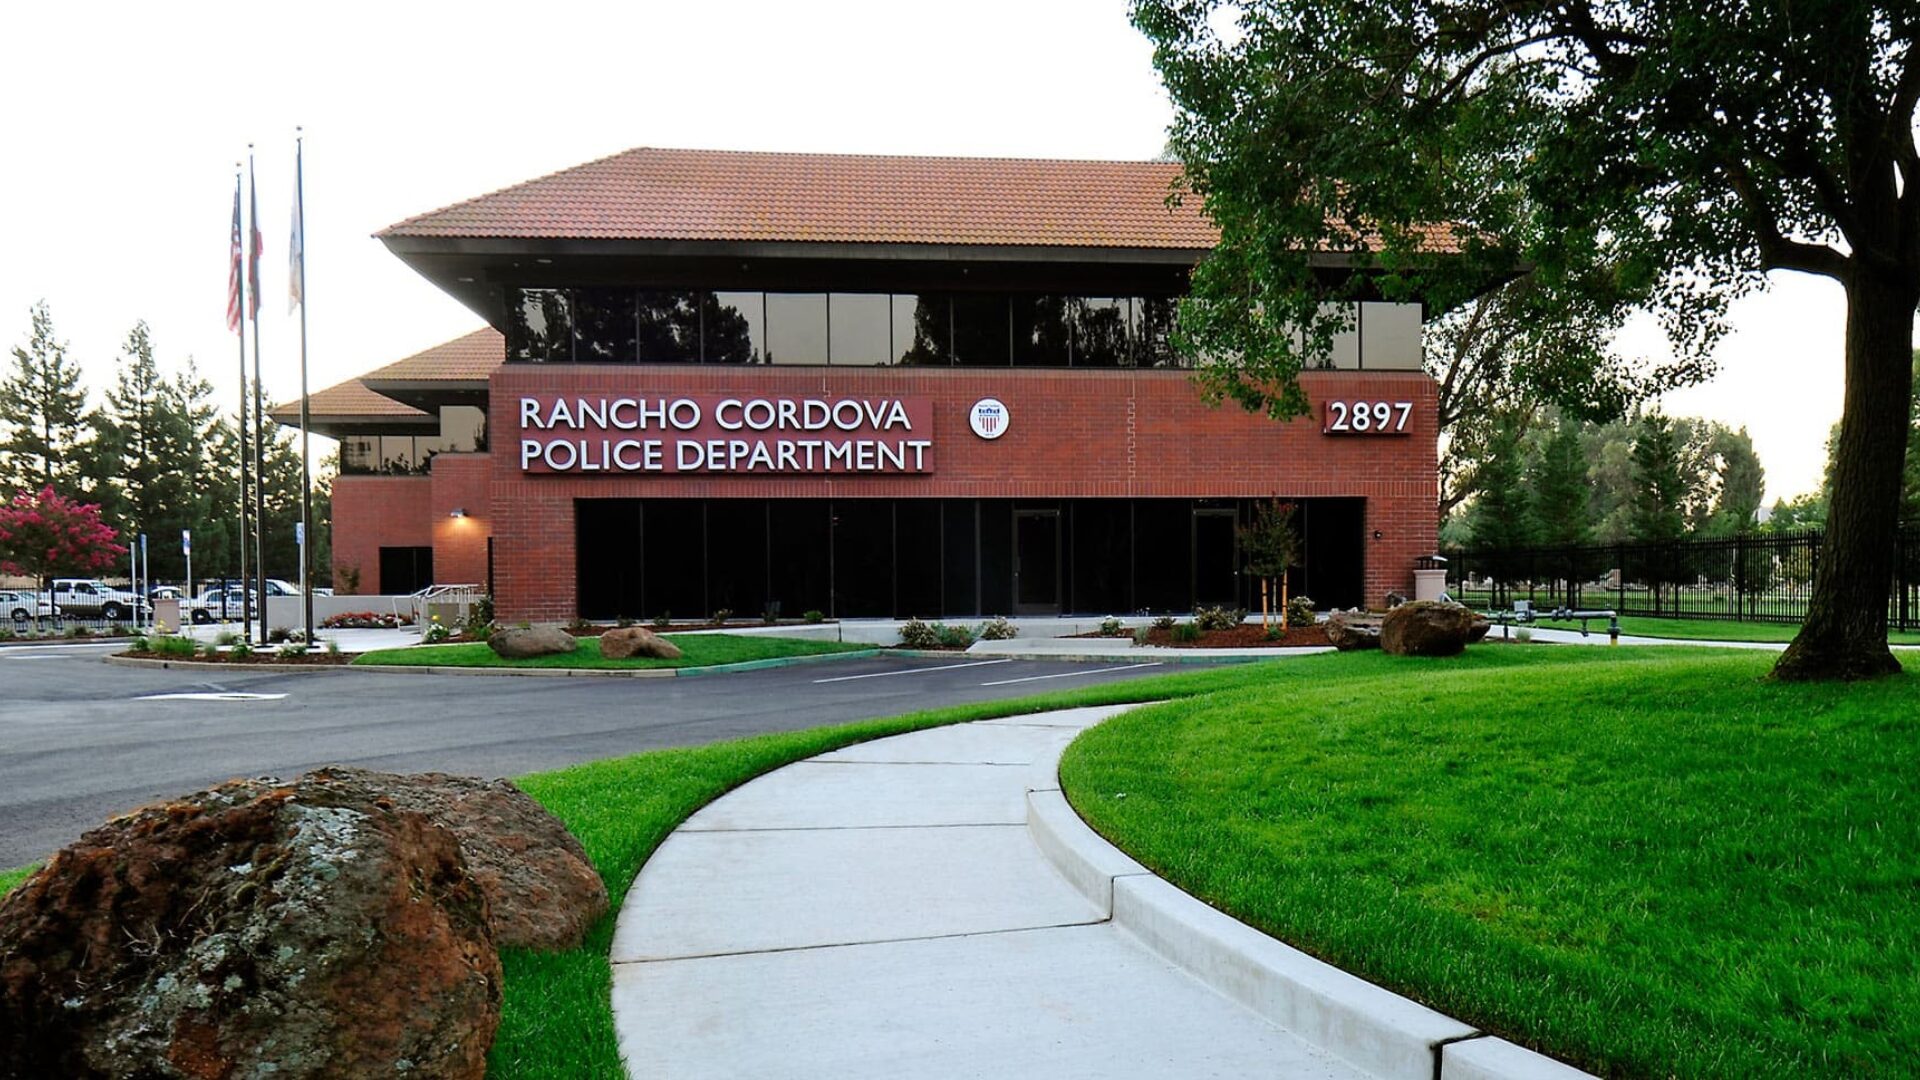 Rancho Cordova Police Department Aaa0018